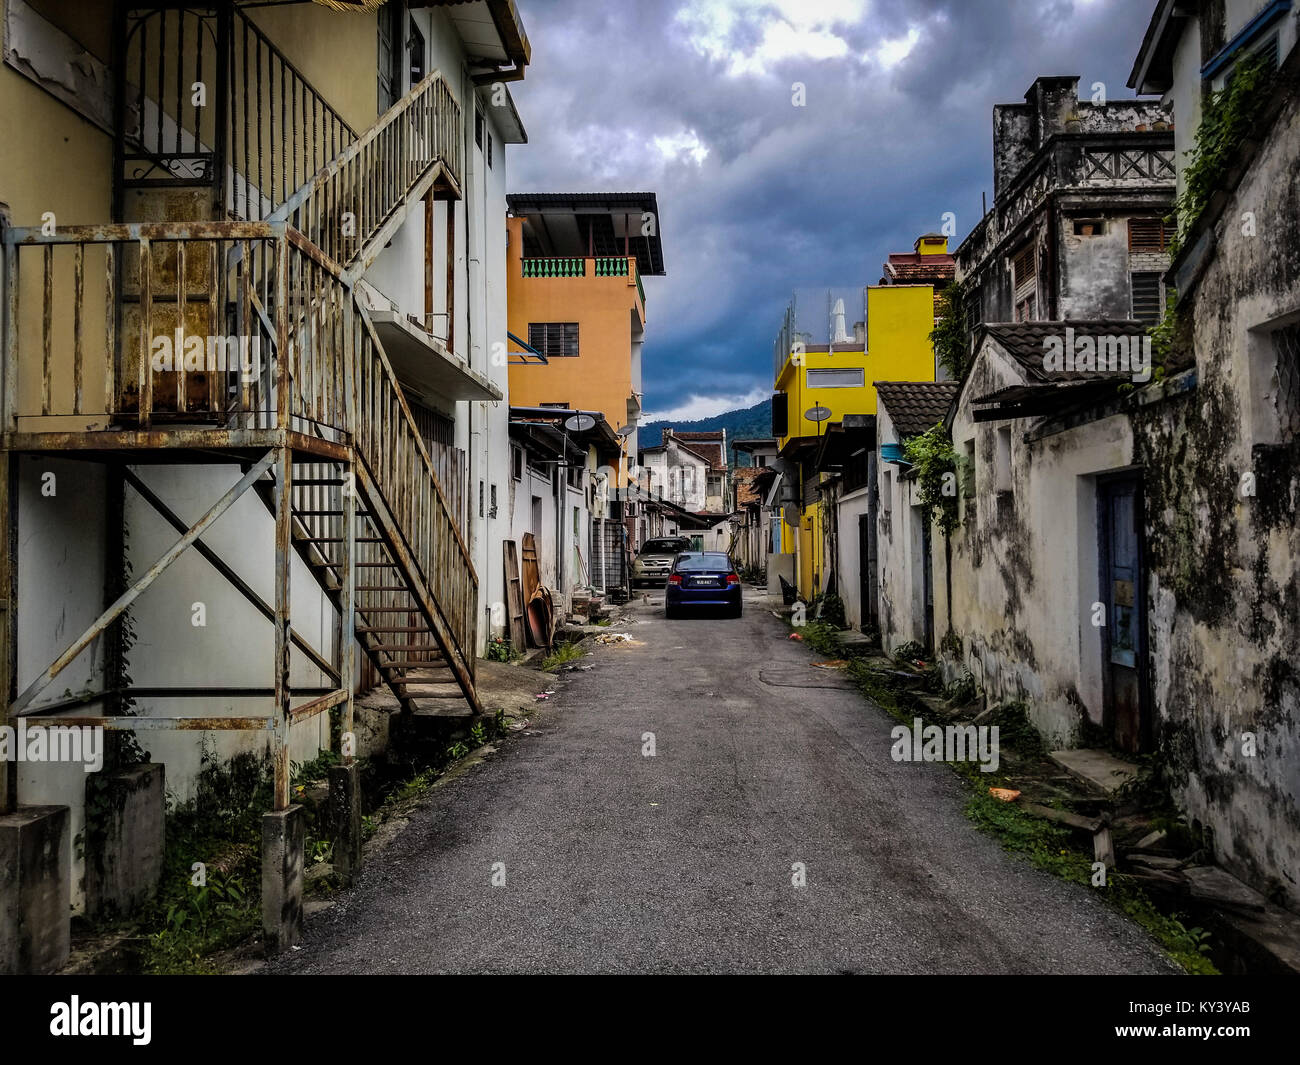 Alley way in Kuala Kubu Bharu with scenic clouds Stock Photo